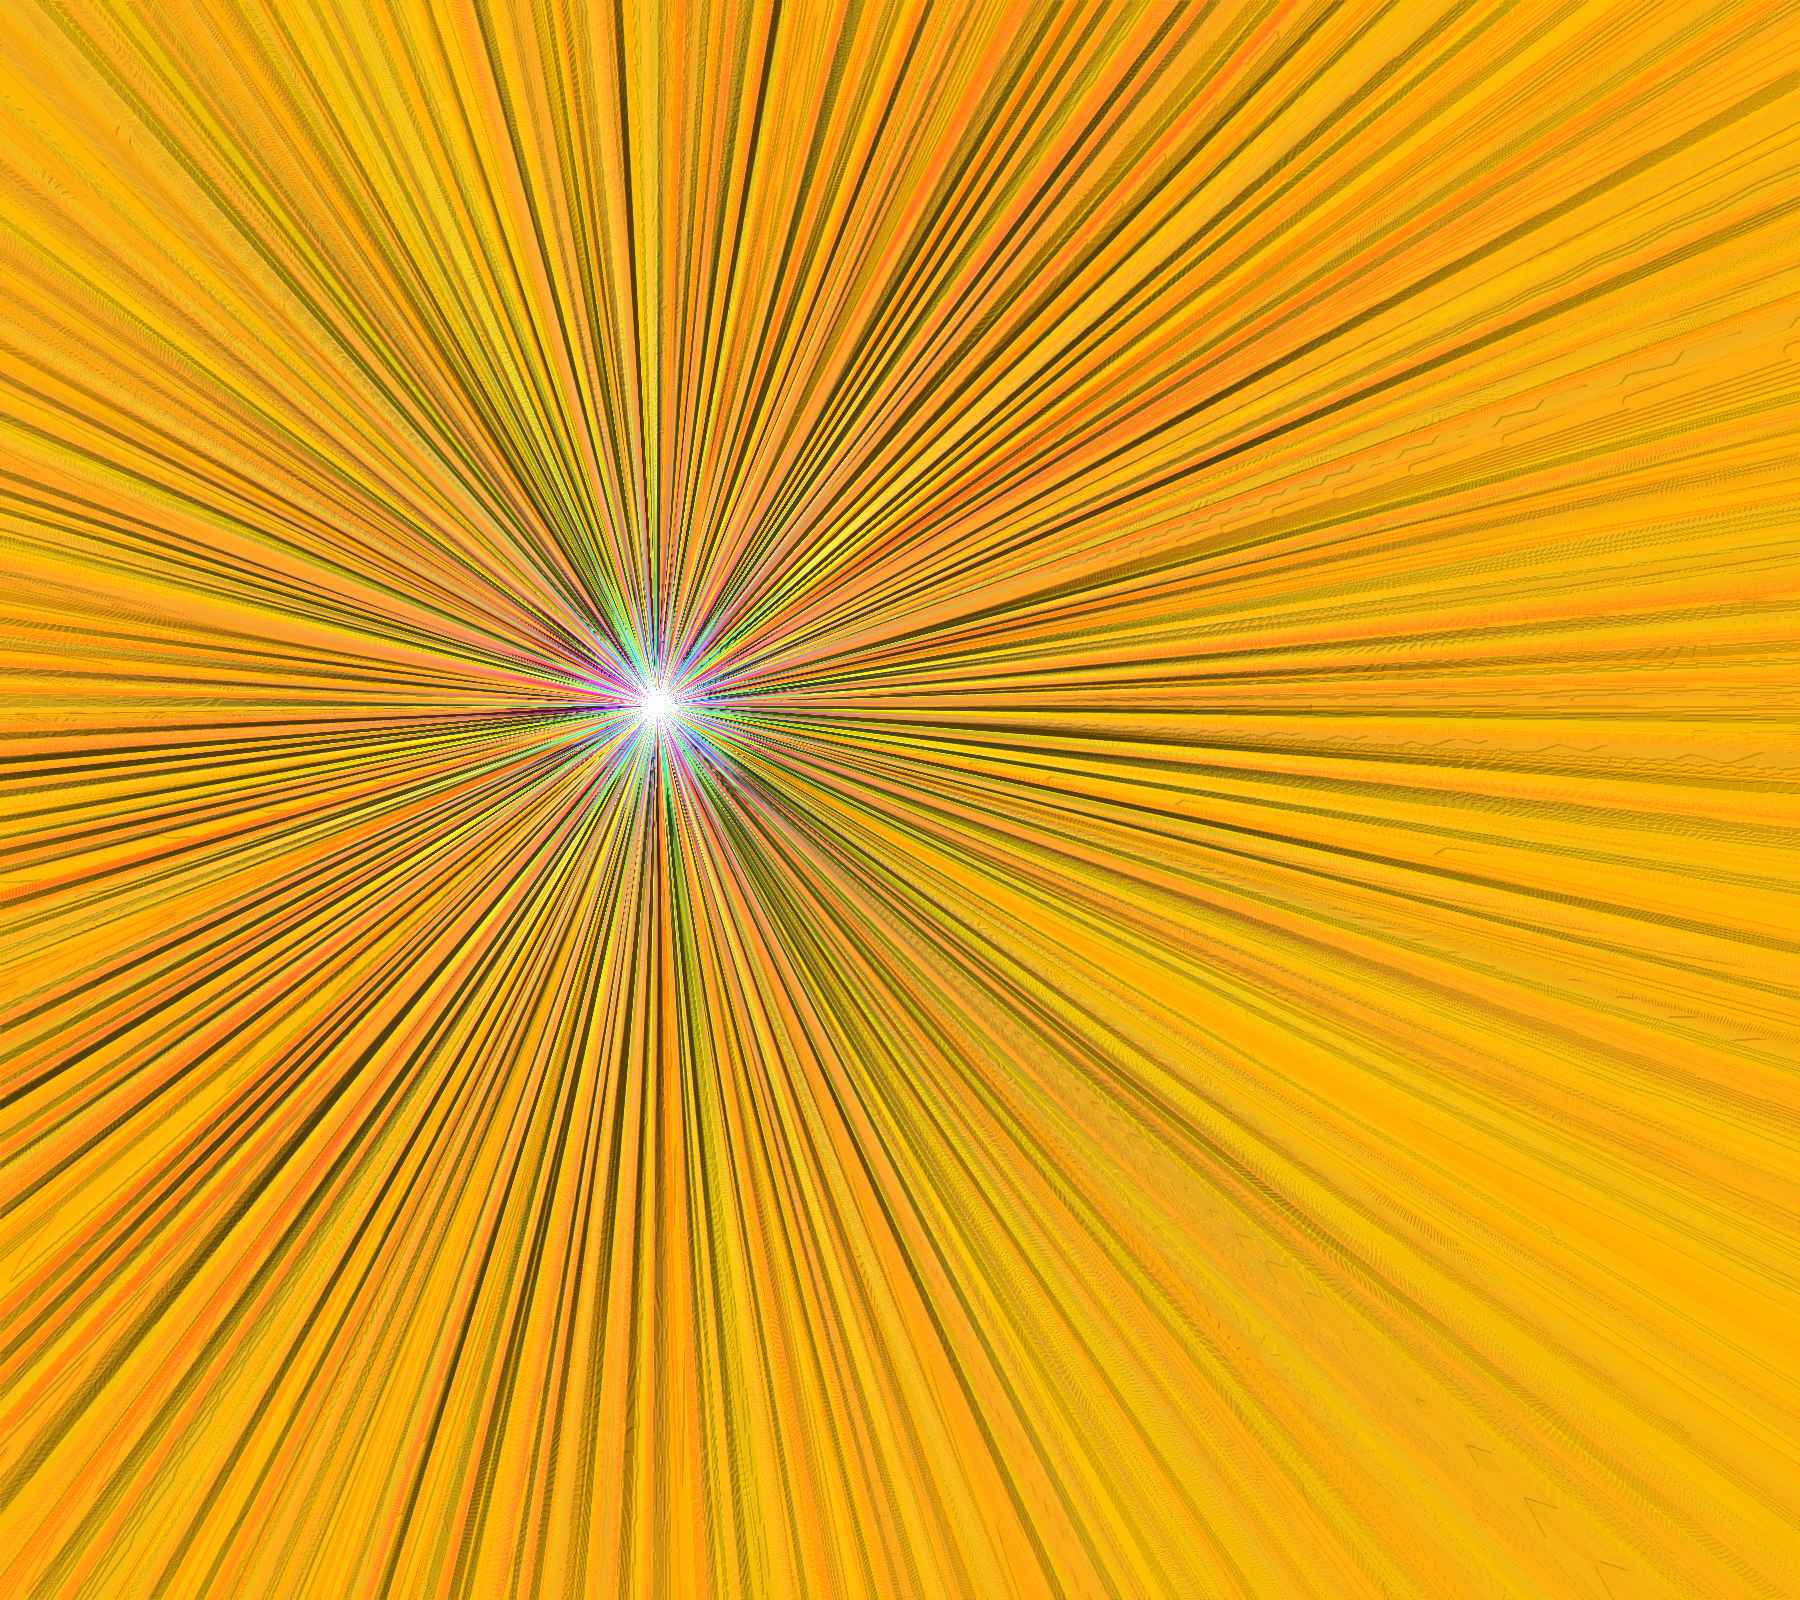 Orange Starburst Radiating Lines Background 1800x1600 HD Wallpapers Download Free Images Wallpaper [wallpaper981.blogspot.com]